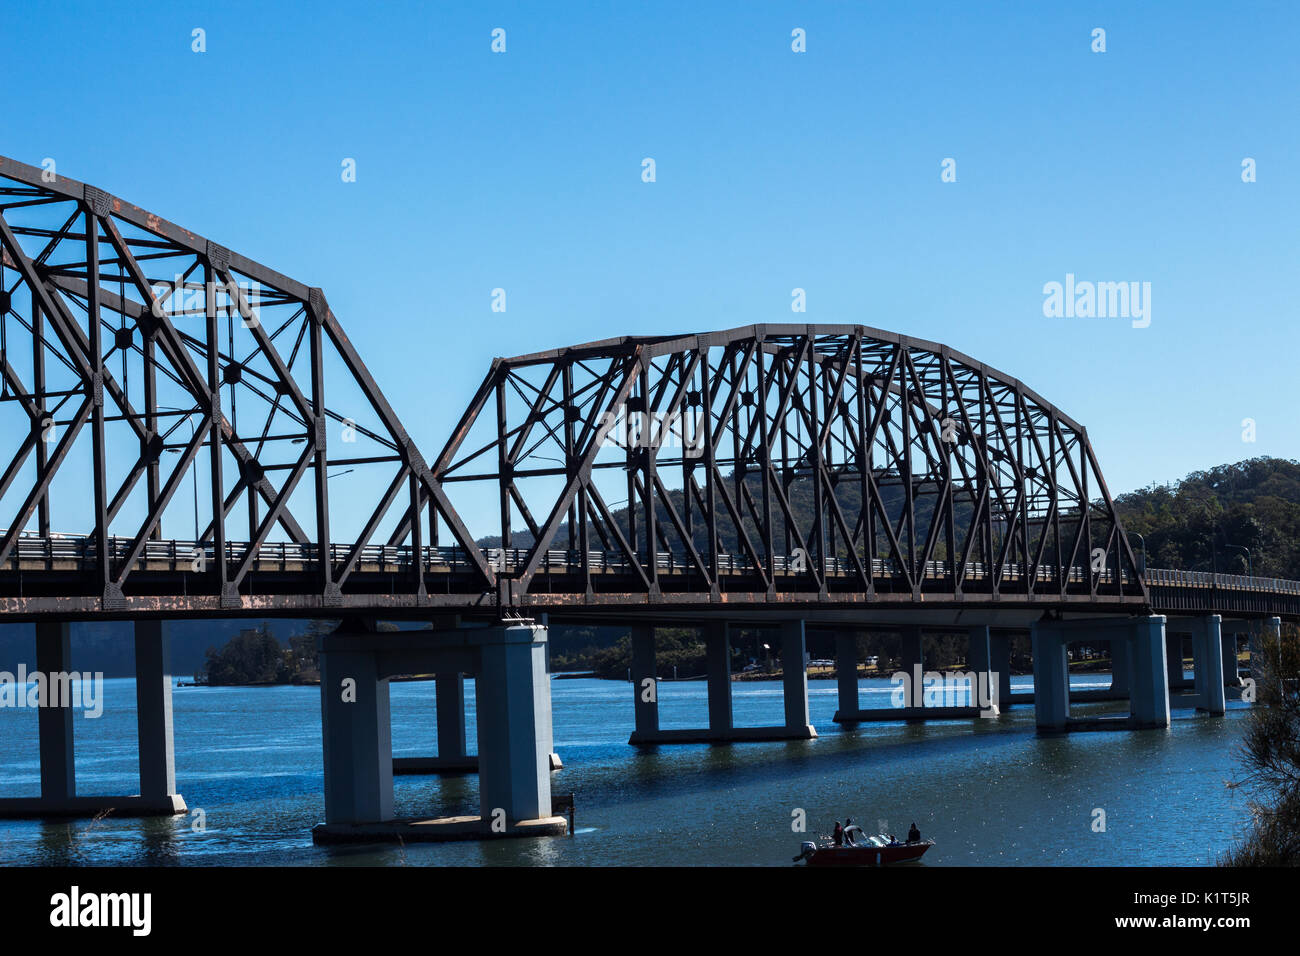 Metal bridge spanning the Hawkesbury River, Brooklyn Australia against blue water and clear blue skies Stock Photo